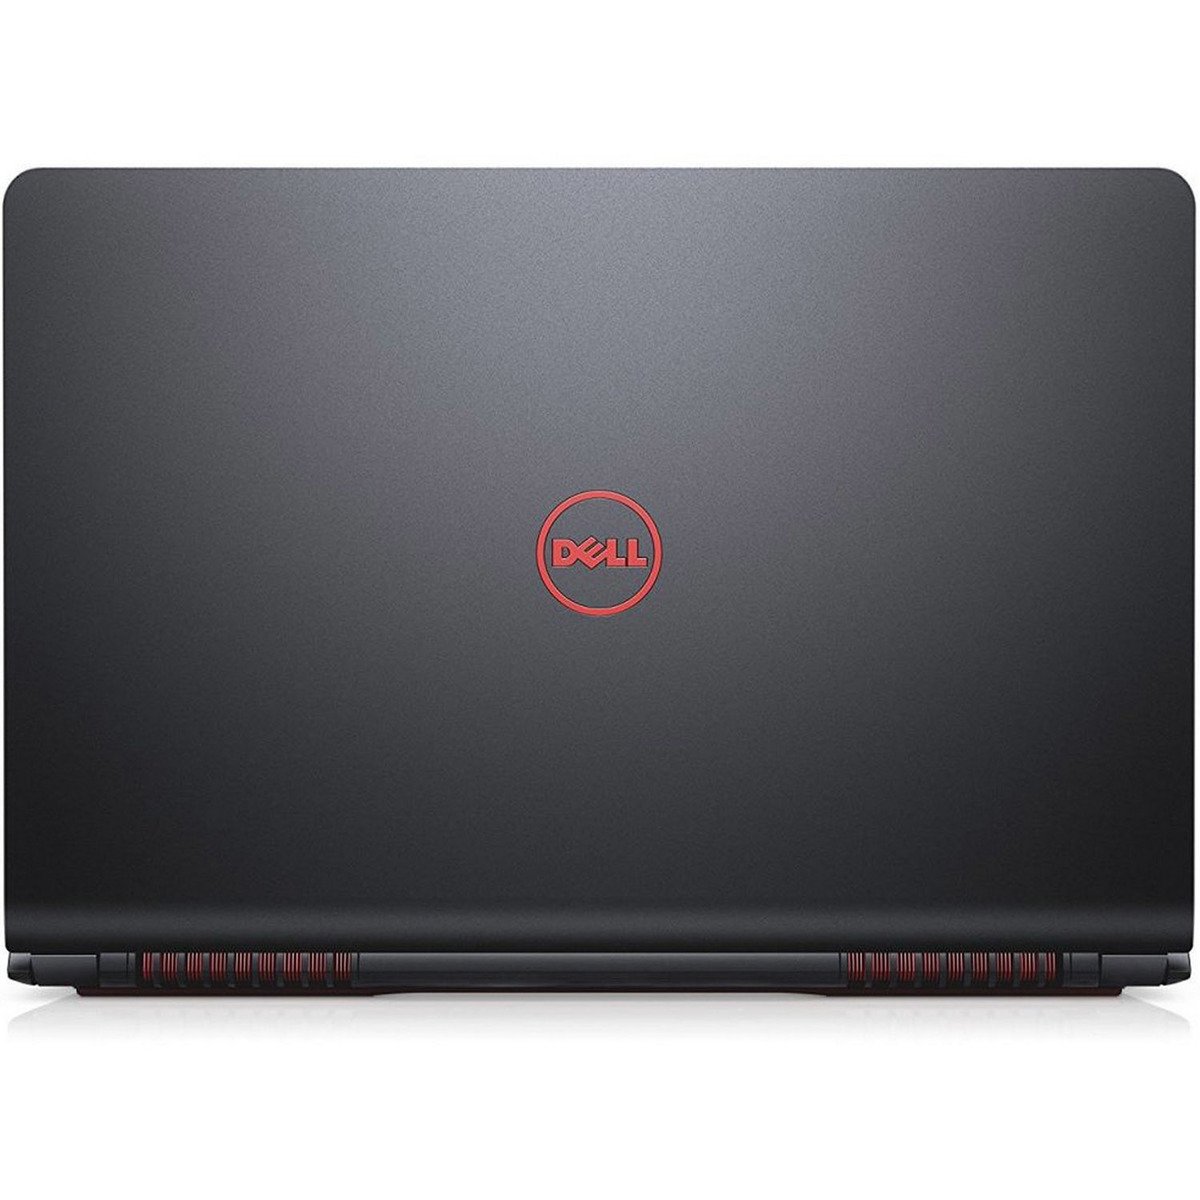 Dell Notebook 5577-INS-1141 Core i7 Black